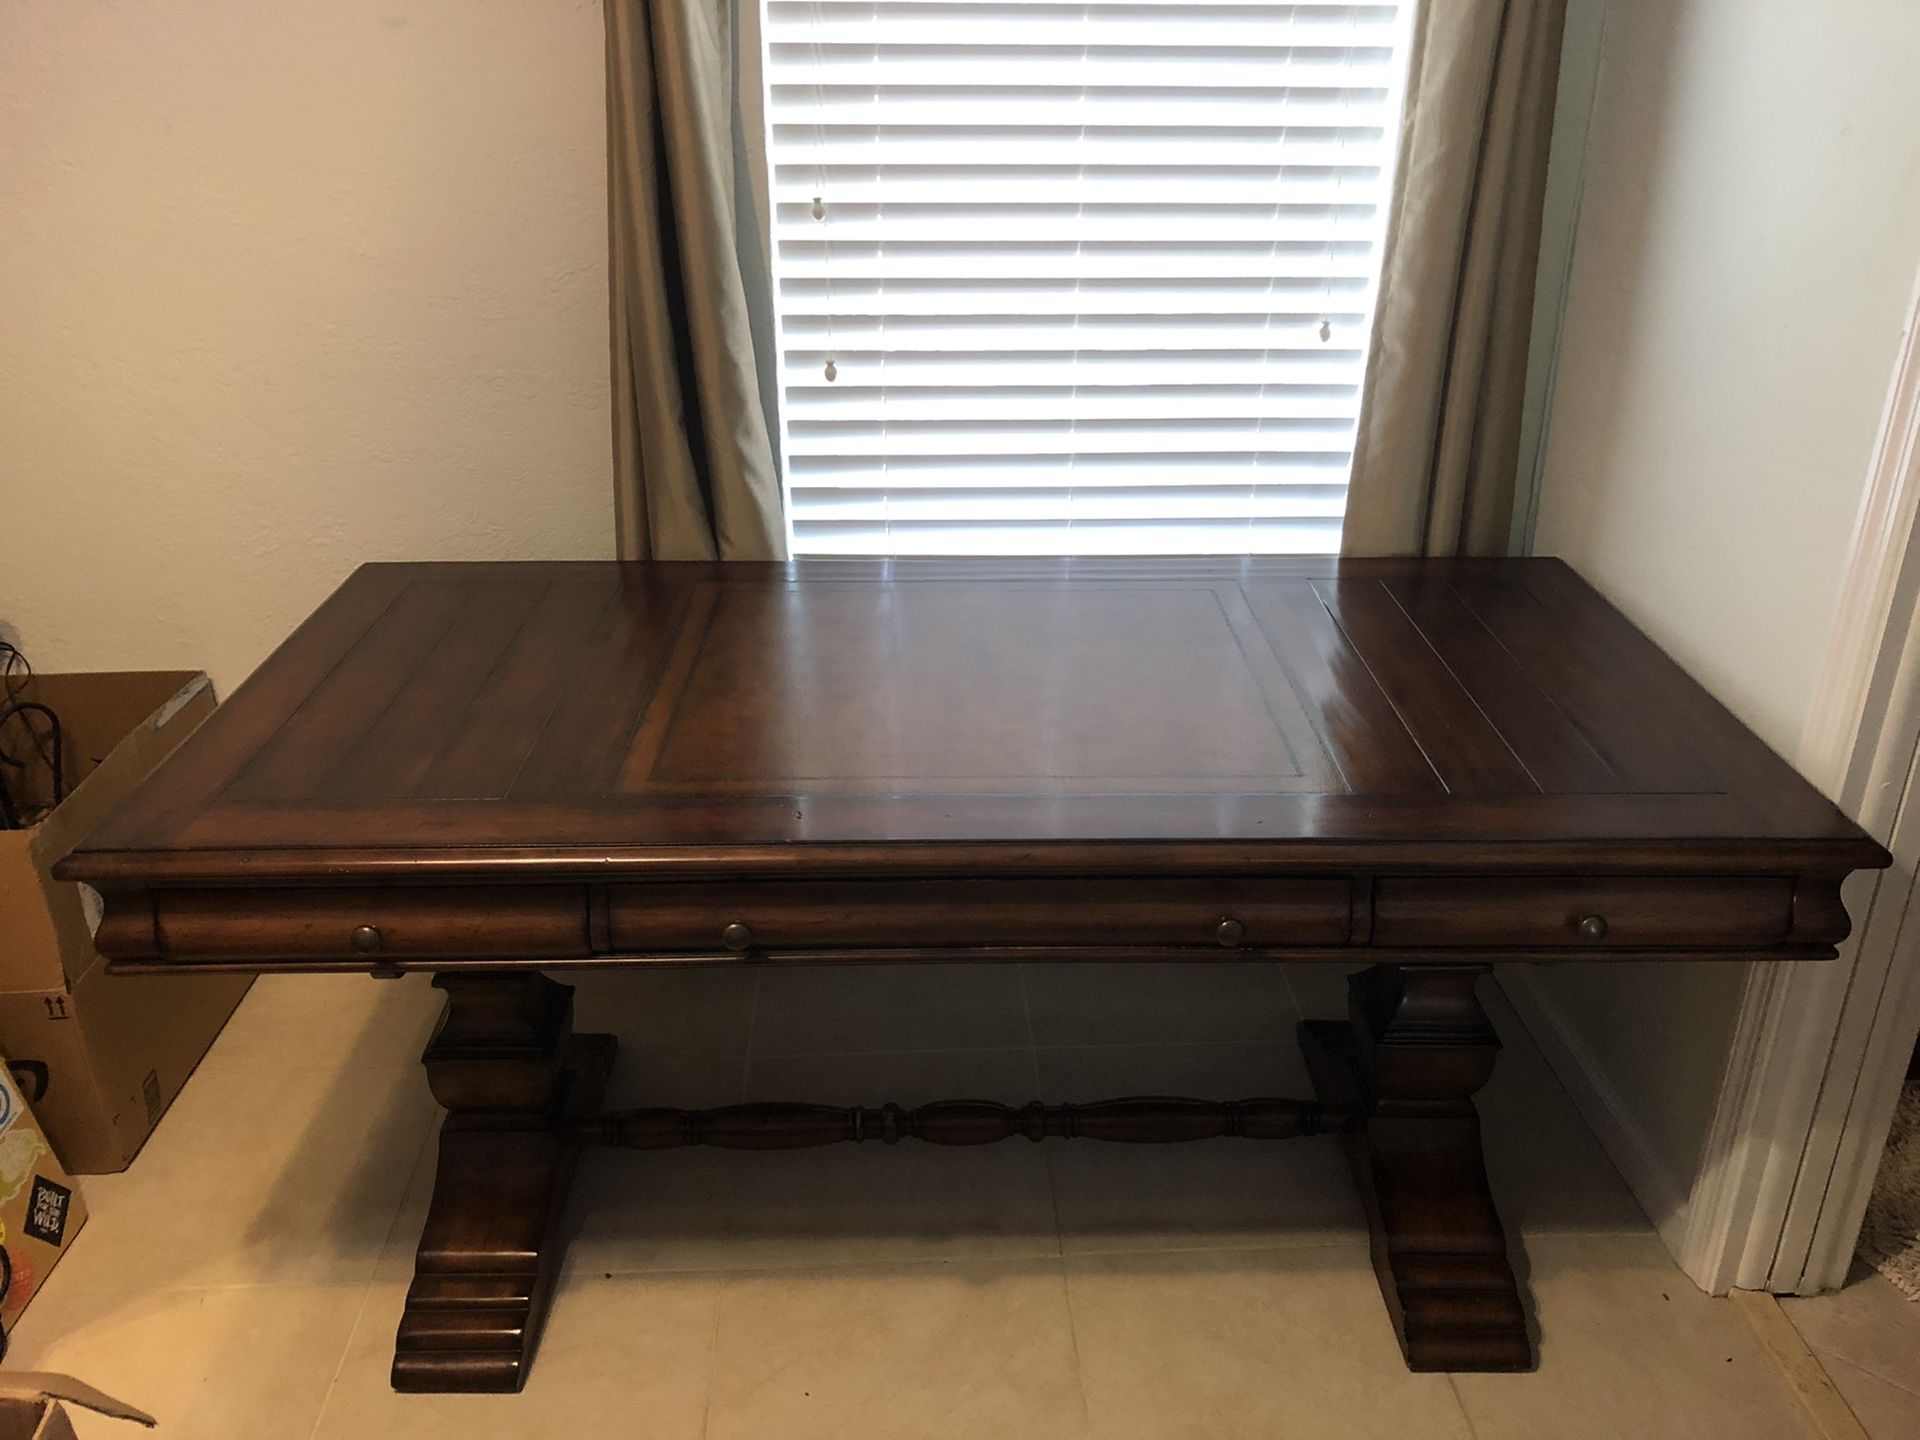 Executive desk - solid wood